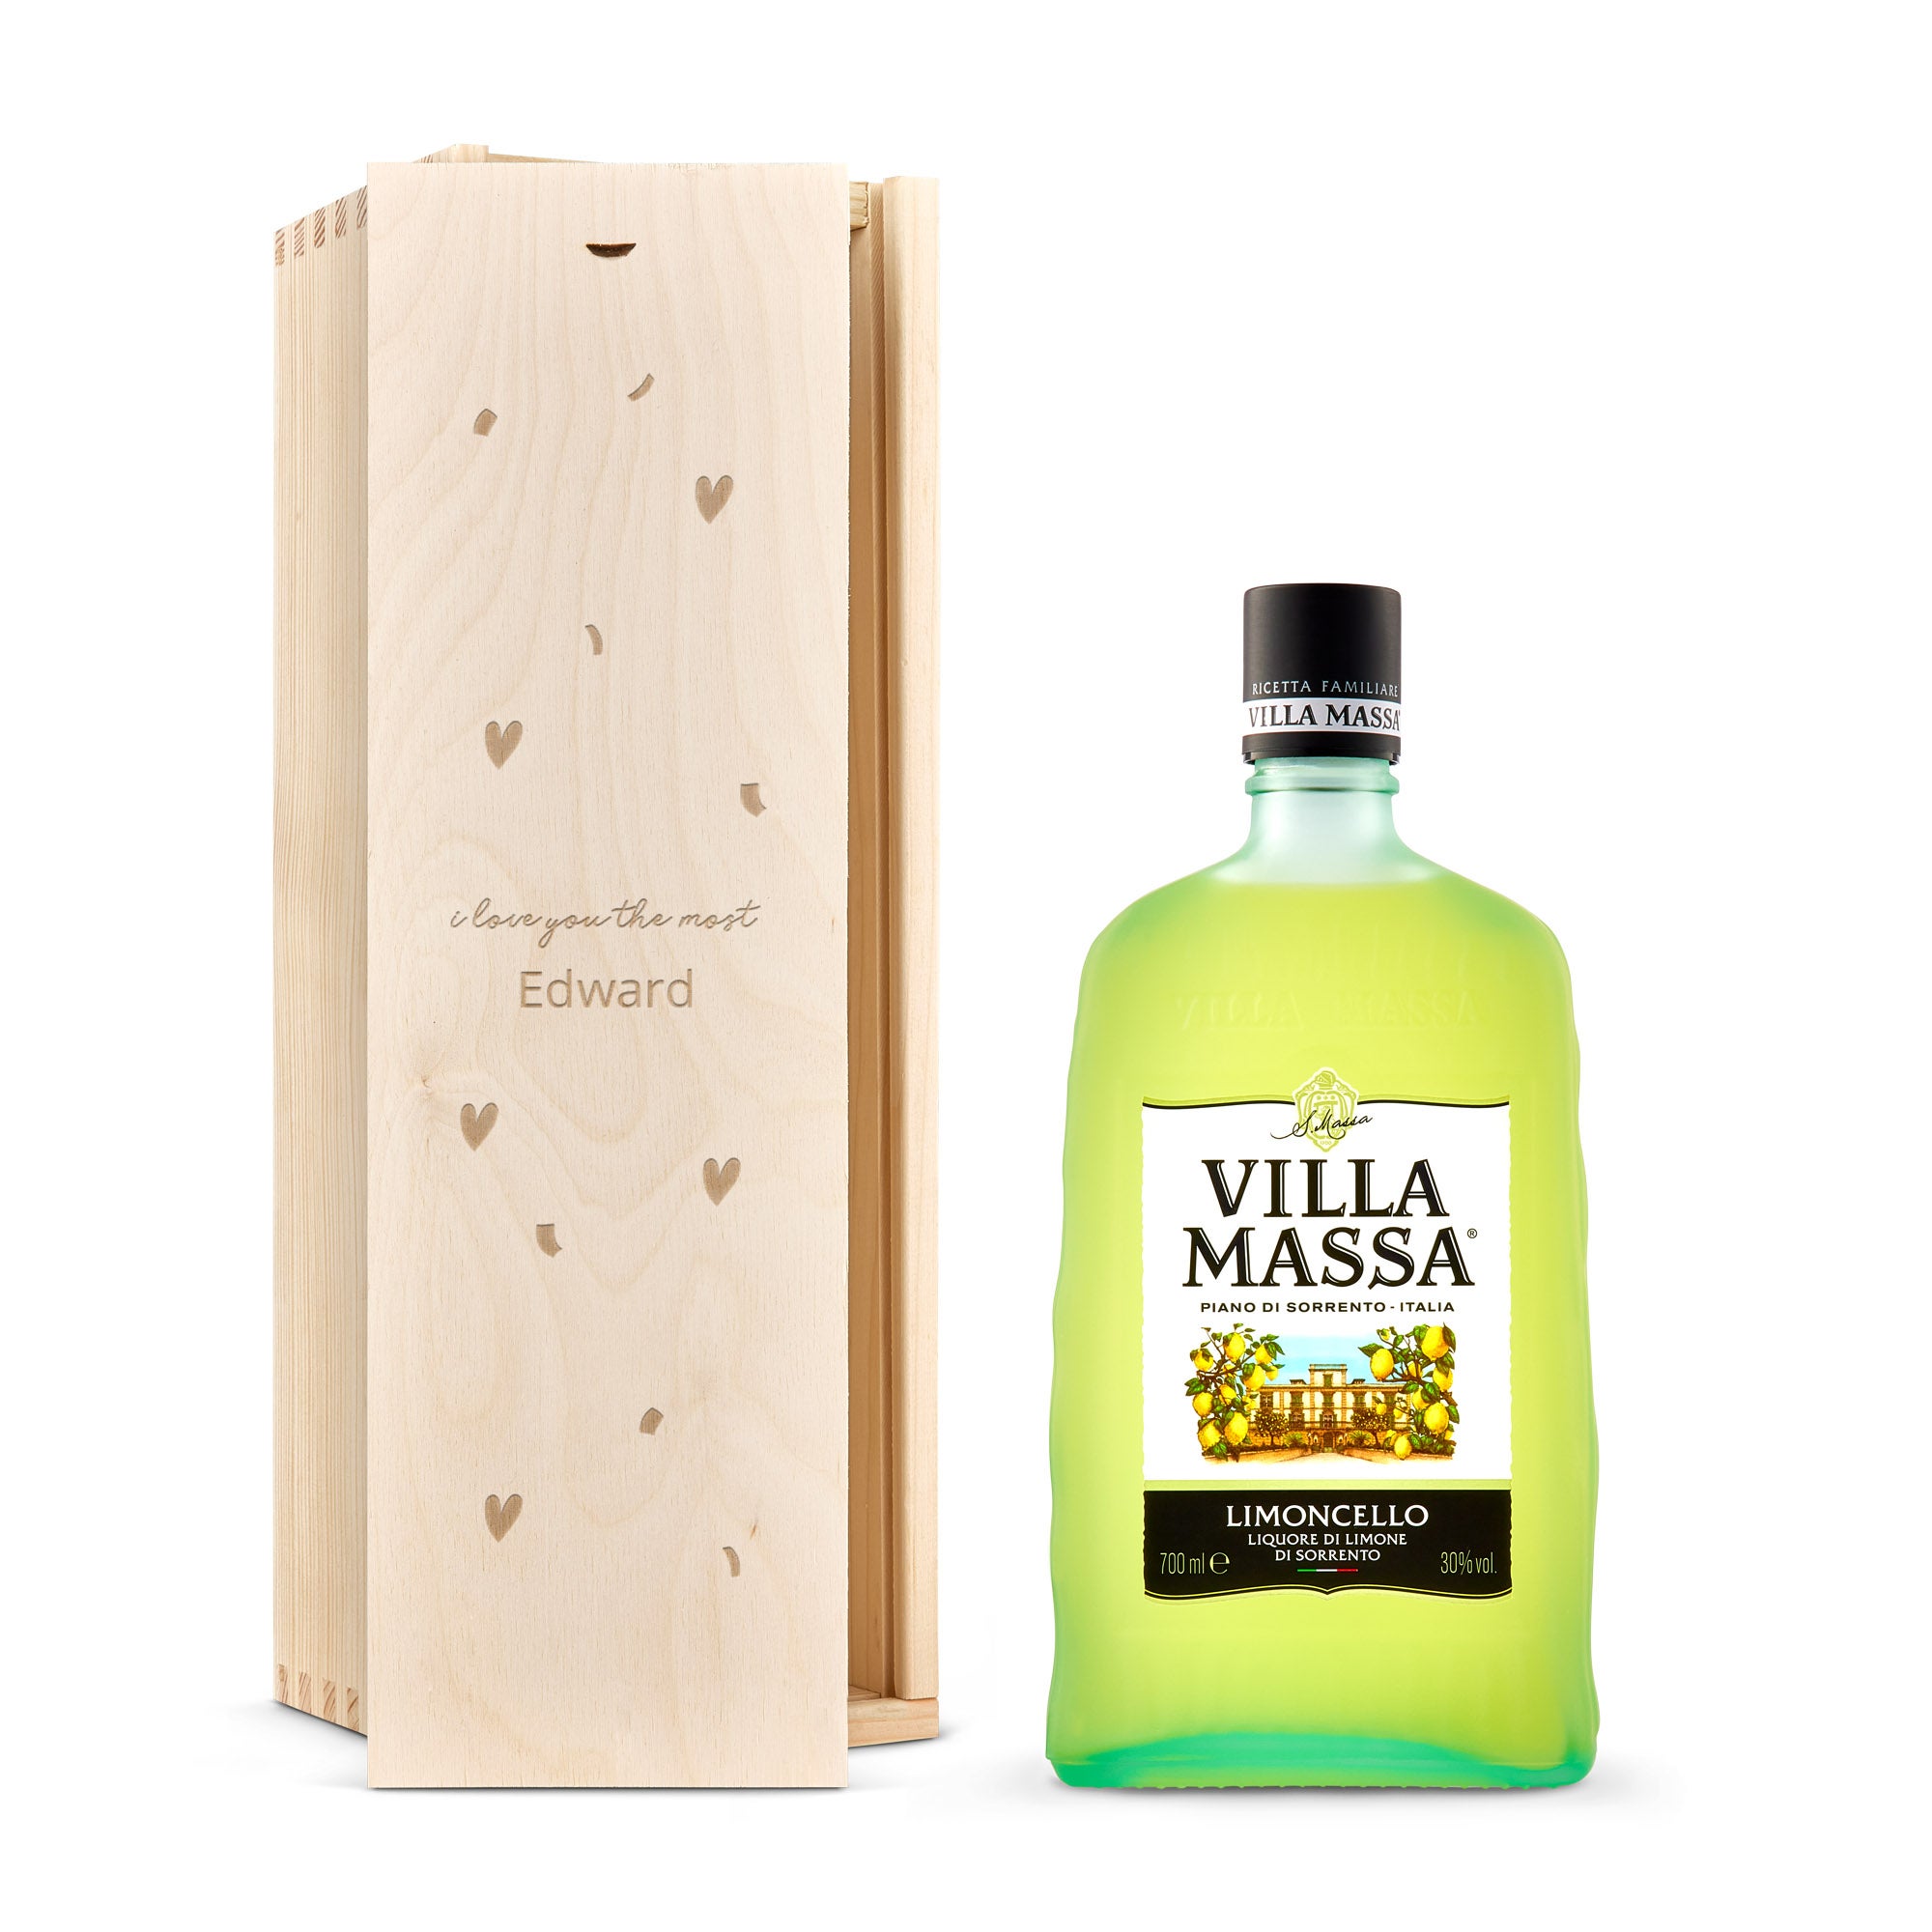 Personalised spirits - Limoncello Villa Massa - Engraved wooden case